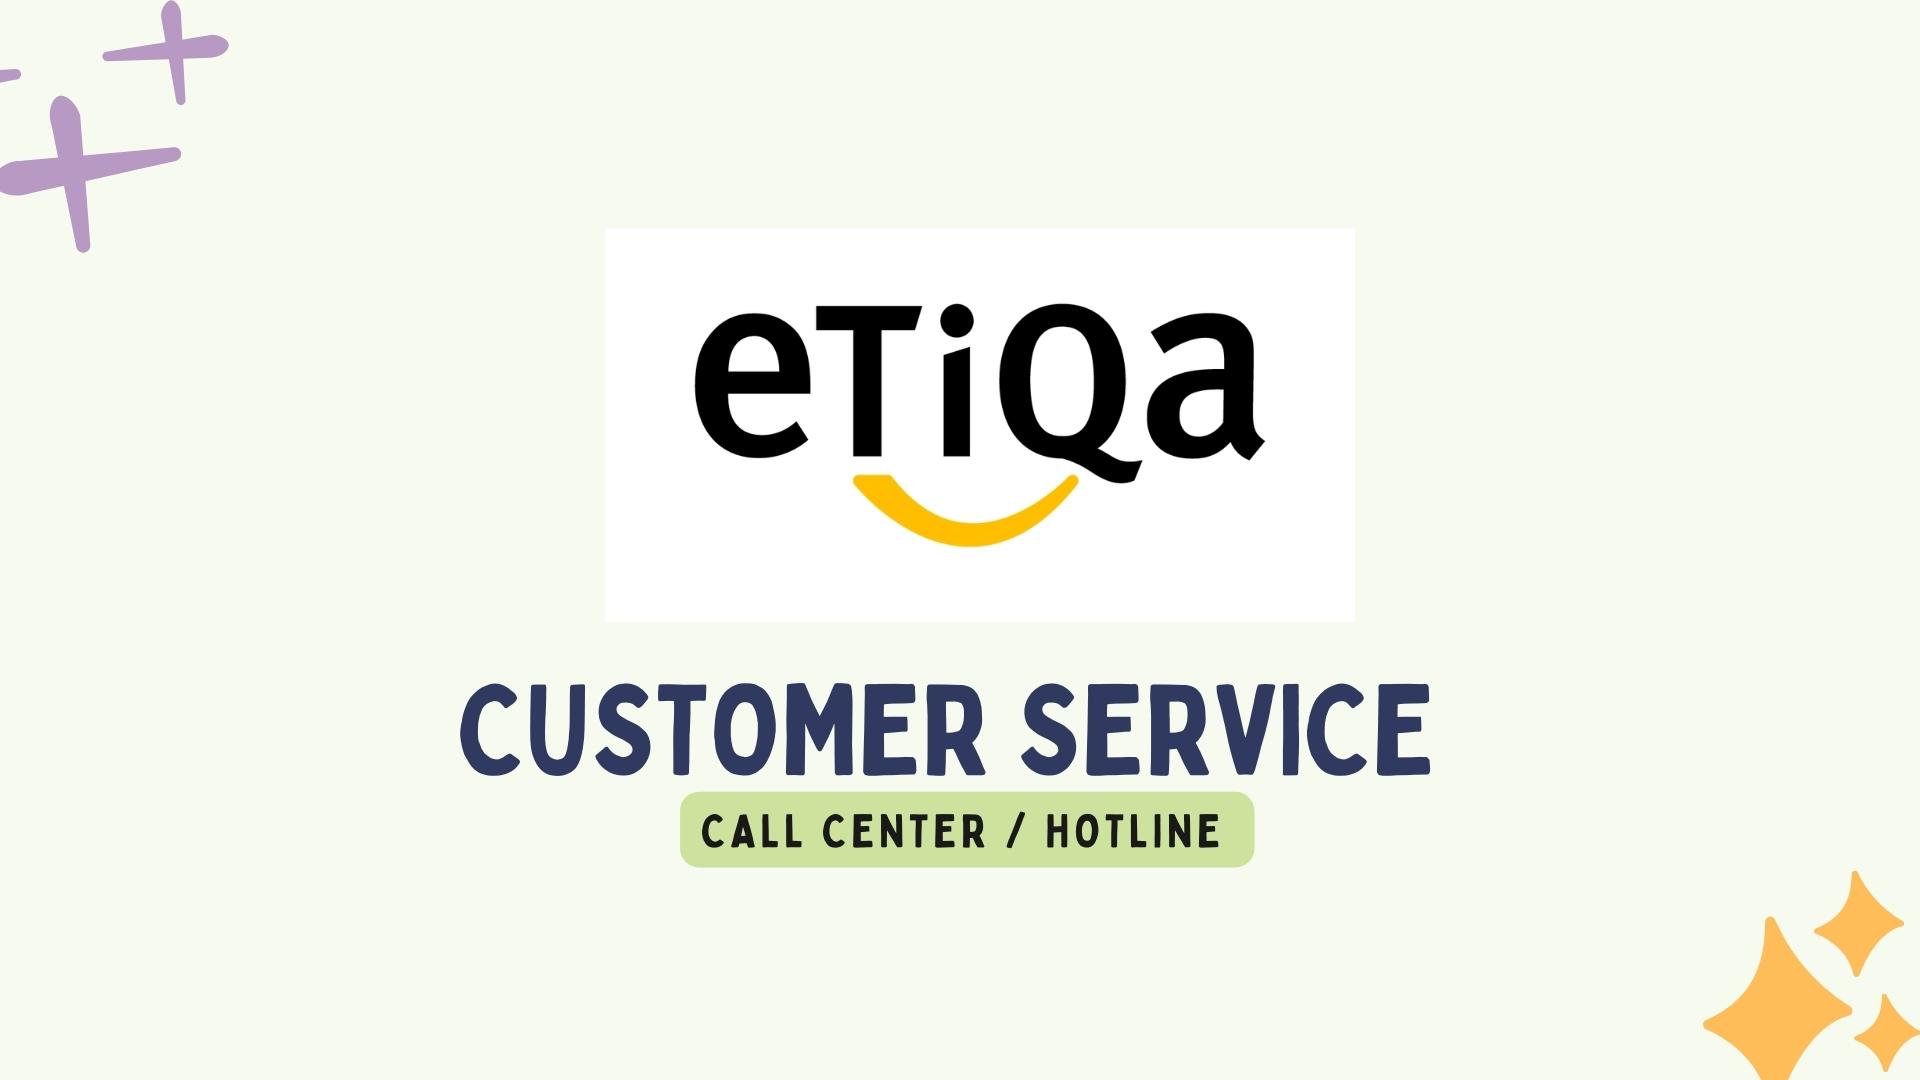 Etiqa Customer Service